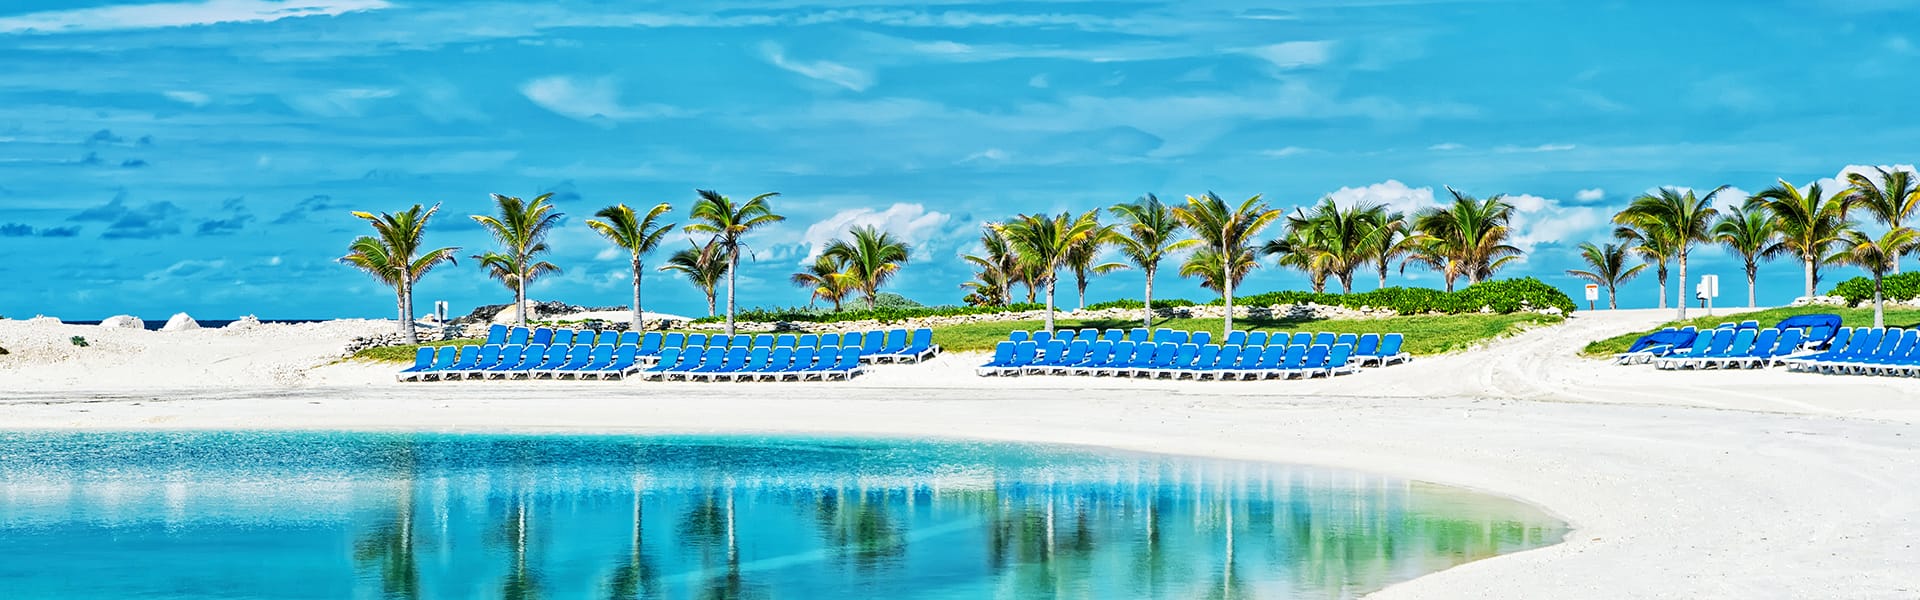 Bahamas: Great Stirrup Cay, Cayo Hueso y Nasáu